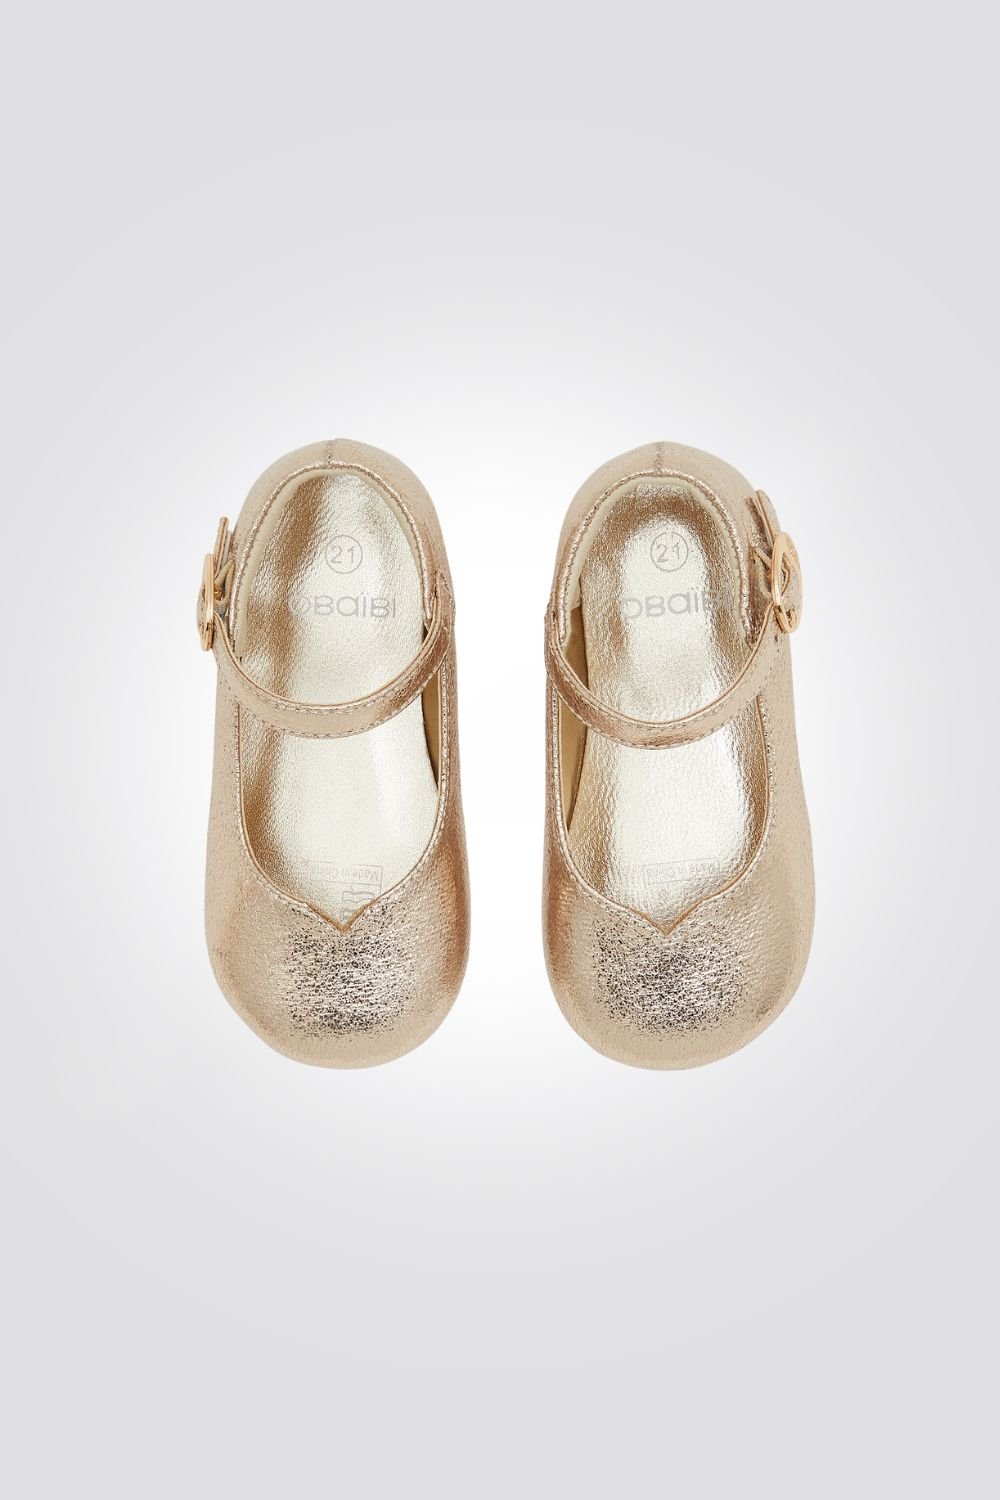 OBAIBI - נעלי בובה לתינוקות בצבע זהב - MASHBIR//365